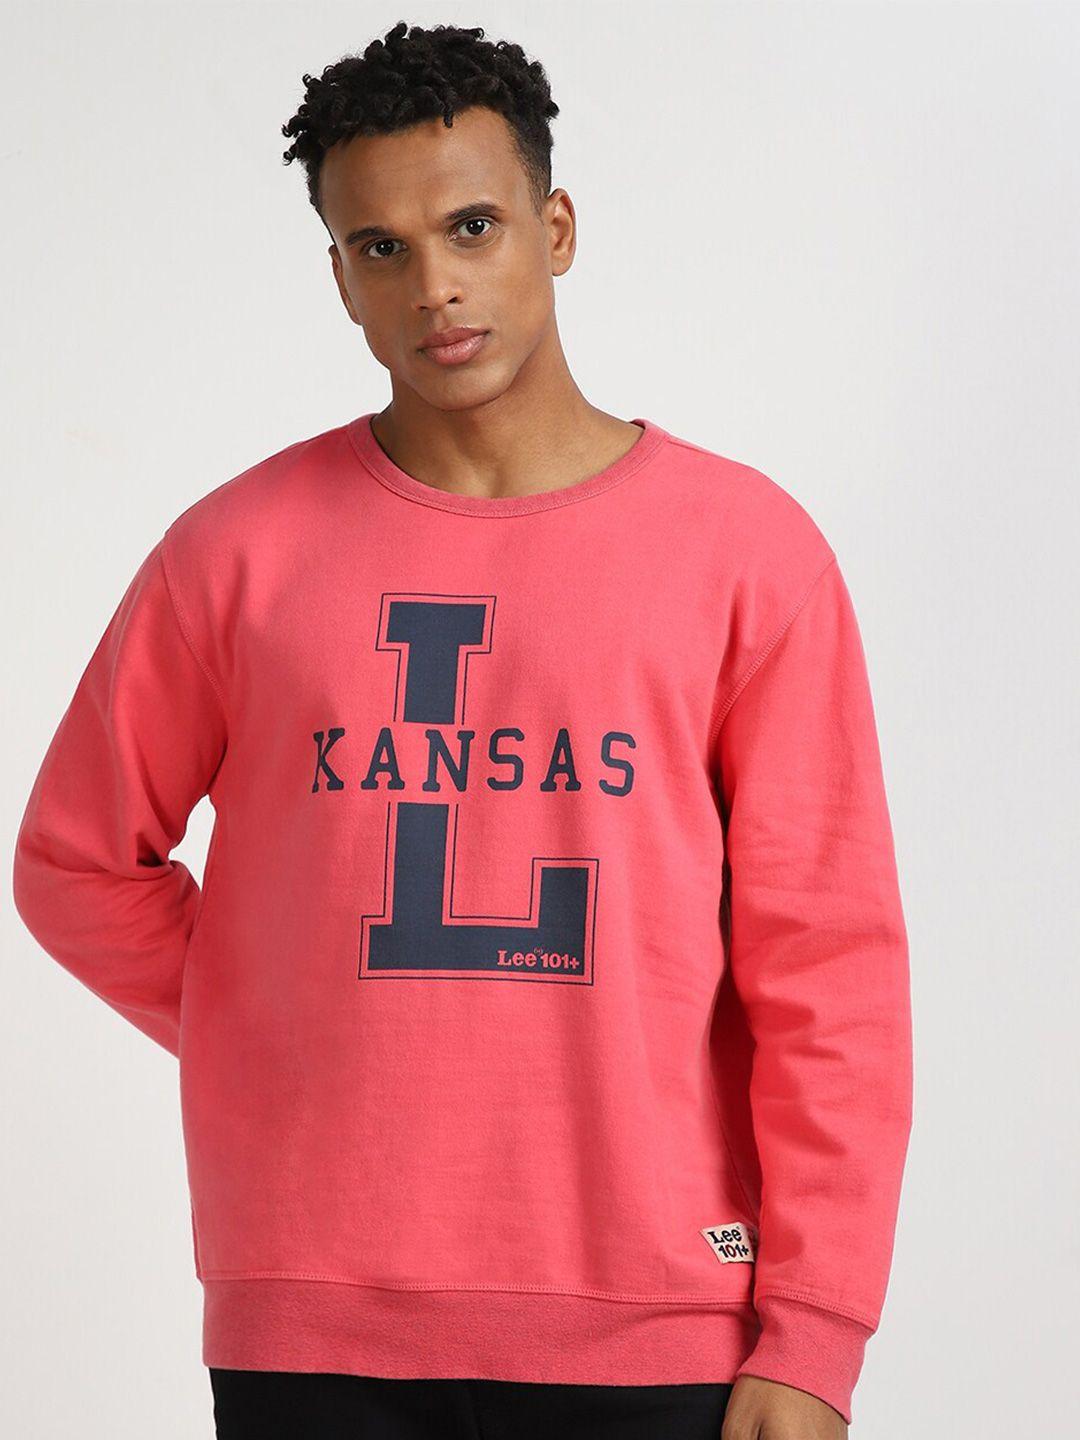 lee-typography-printed-round-neck-cotton-pullover-sweatshirt